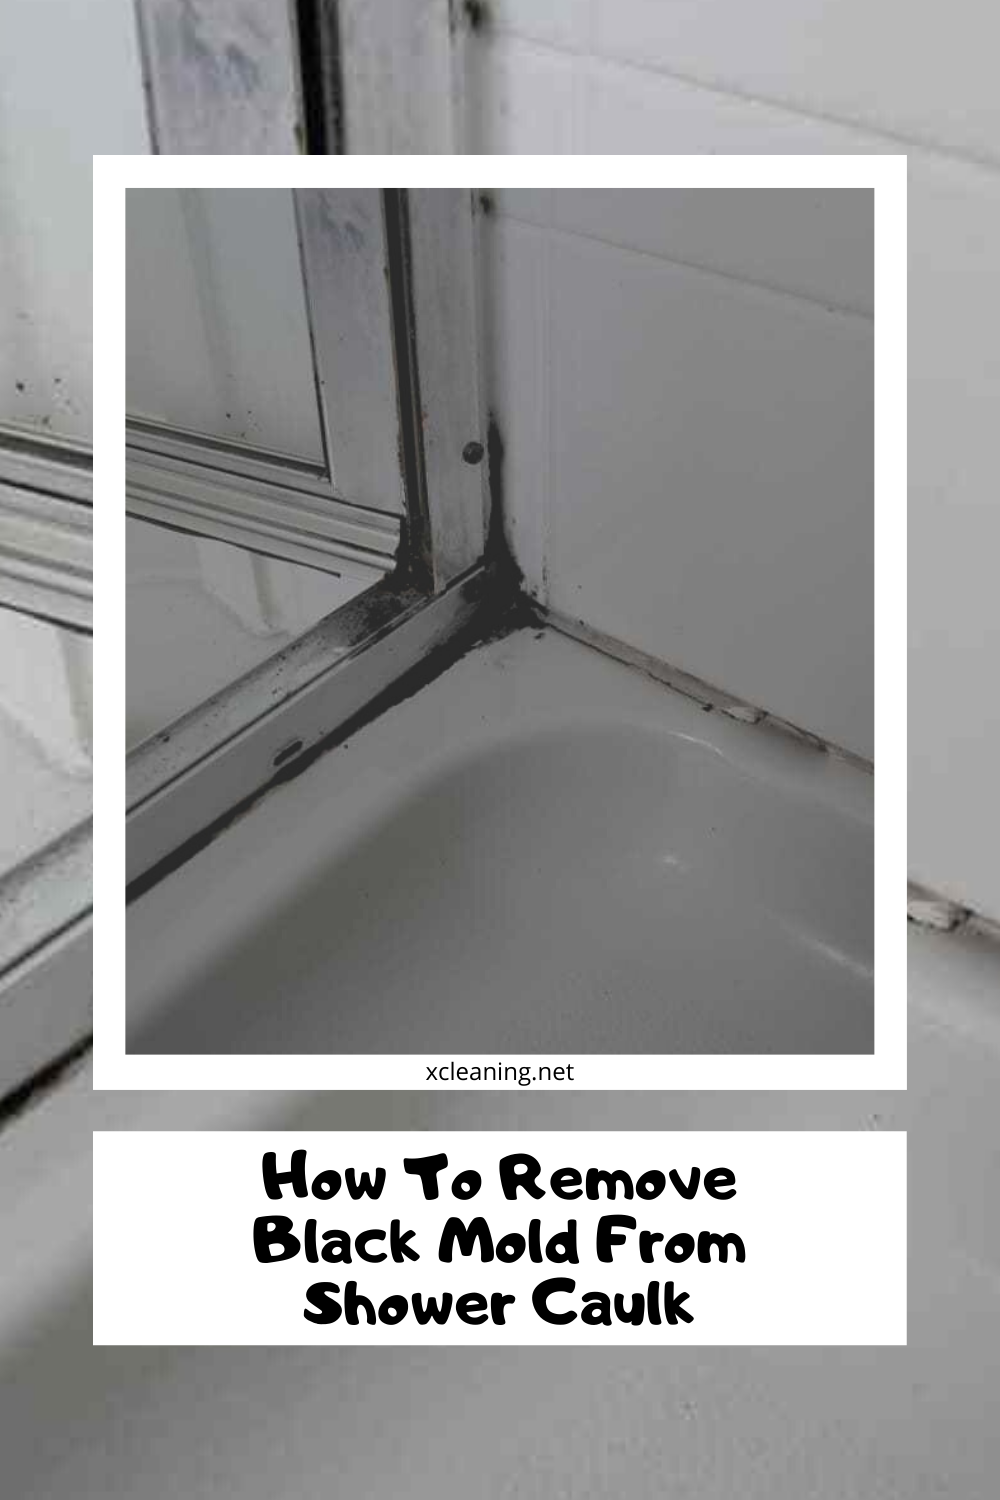 How To Remove Black Mold From Shower Caulk Xcleaning Net Your Cleaning Tips - How To Remove Mold From Caulking In Bathroom